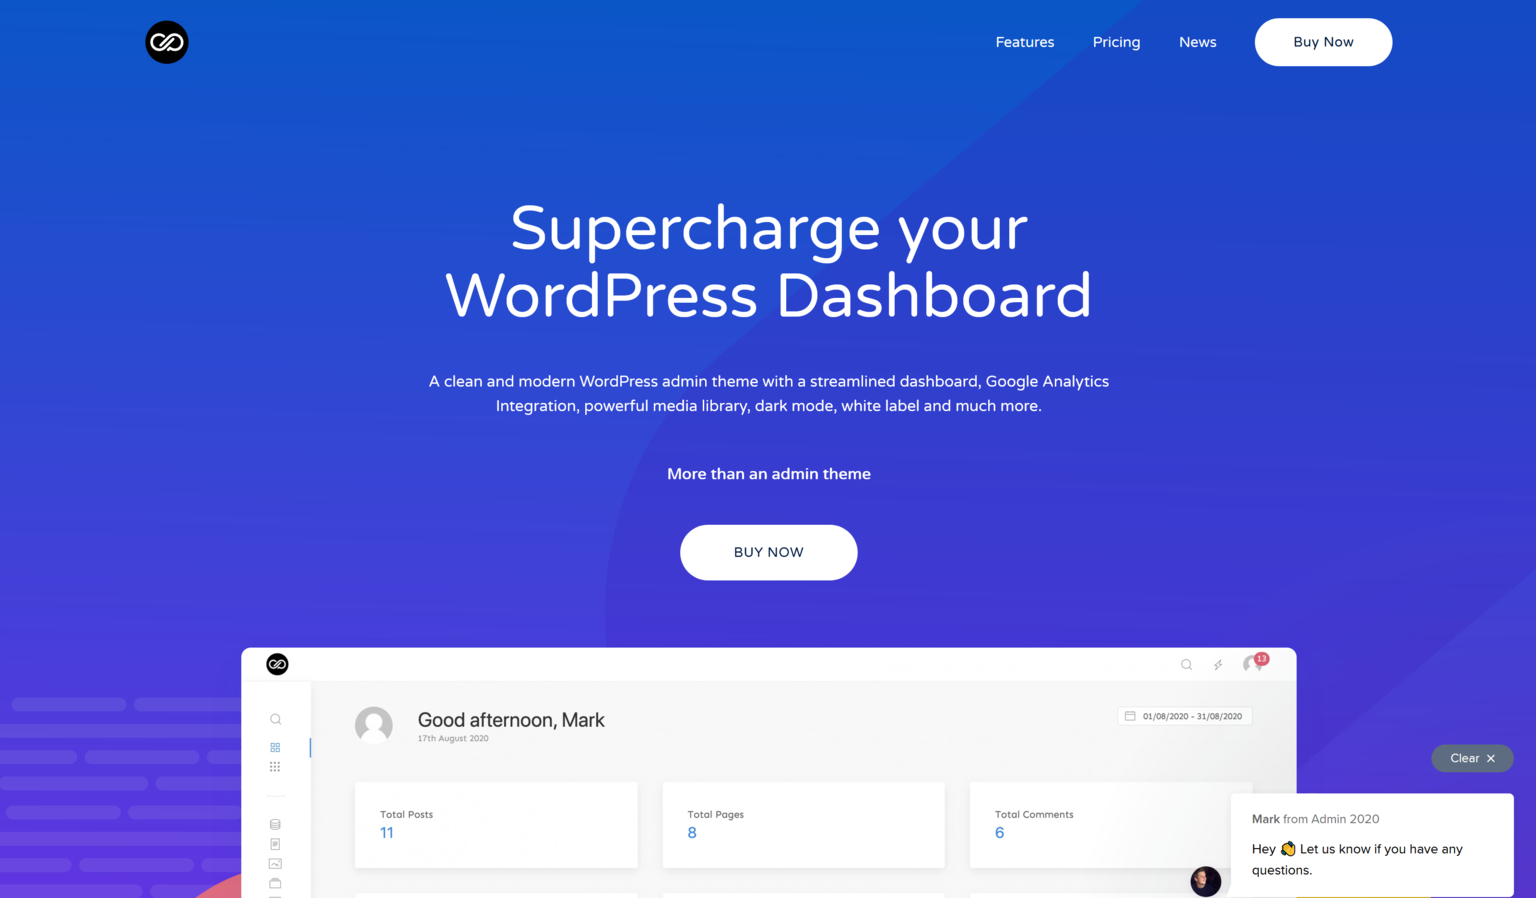 UiPress v2.4.1 – Supercharge your WordPress Dashboard